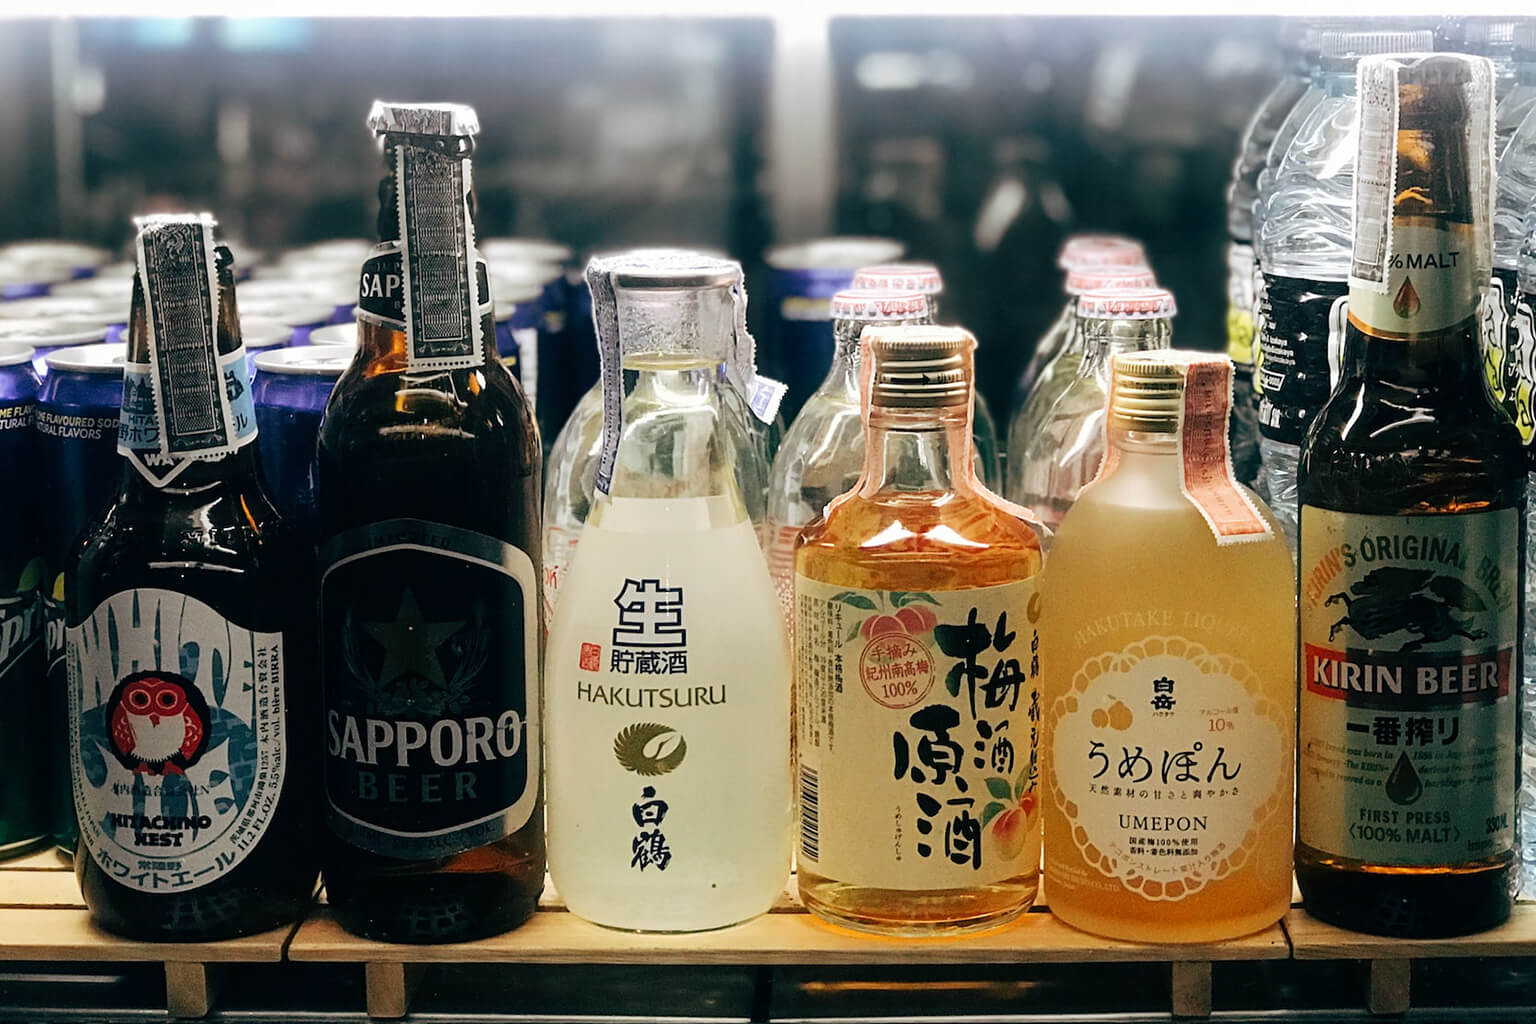 Various Japanese beers and spirits